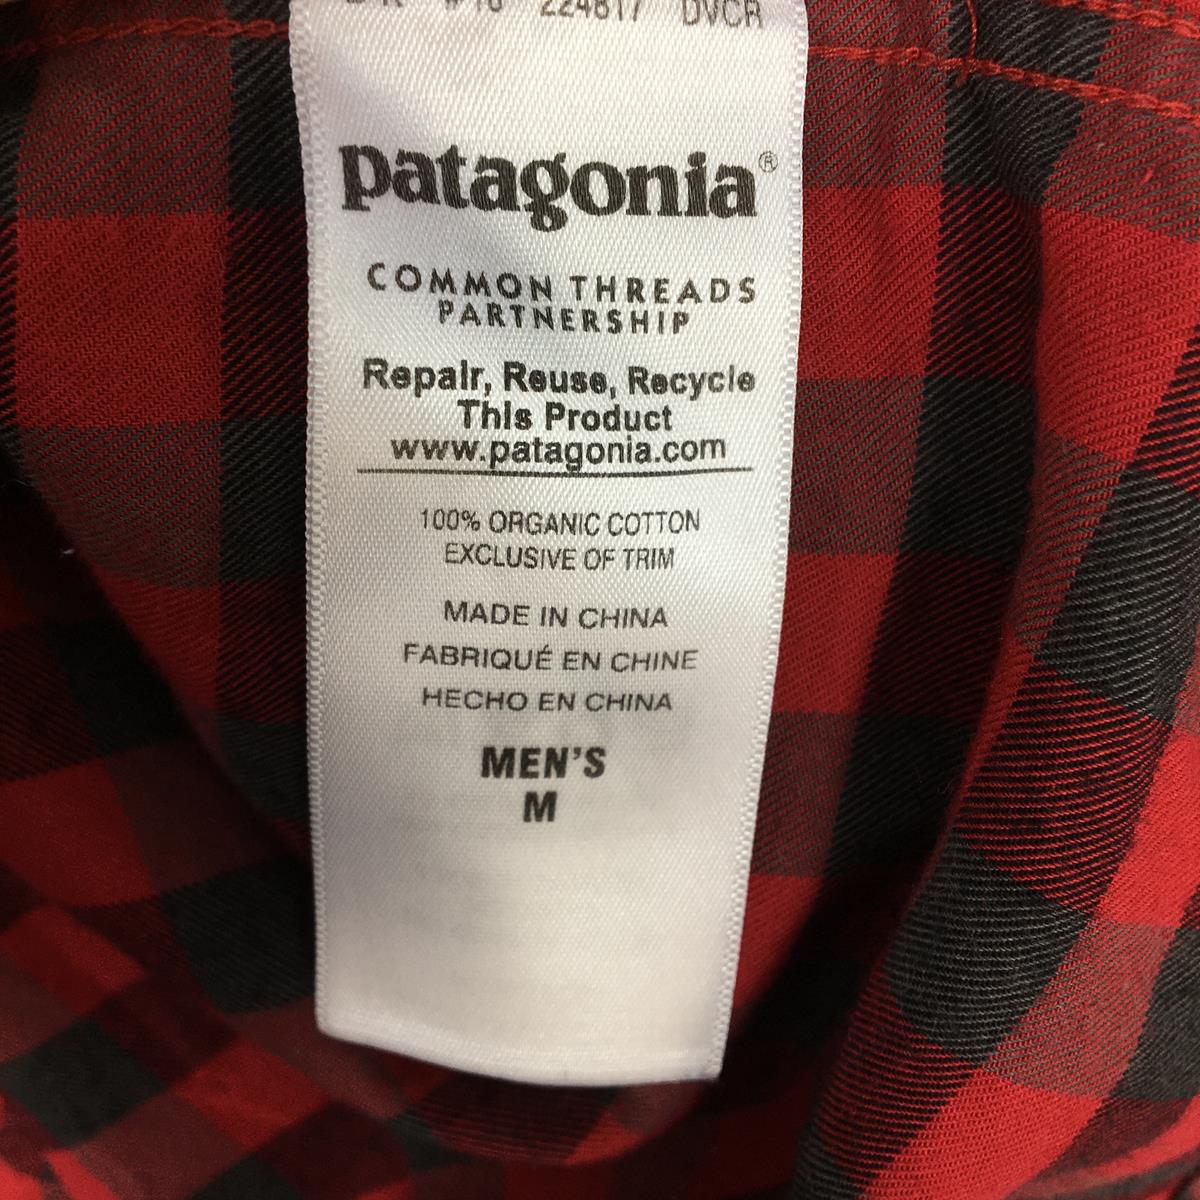 【MEN's M】 パタゴニア ロングスリーブ ピマコットン シャツ Long-Sleeved Pima Cotton Shirt PATAGONIA 53837 DVCR レッド系